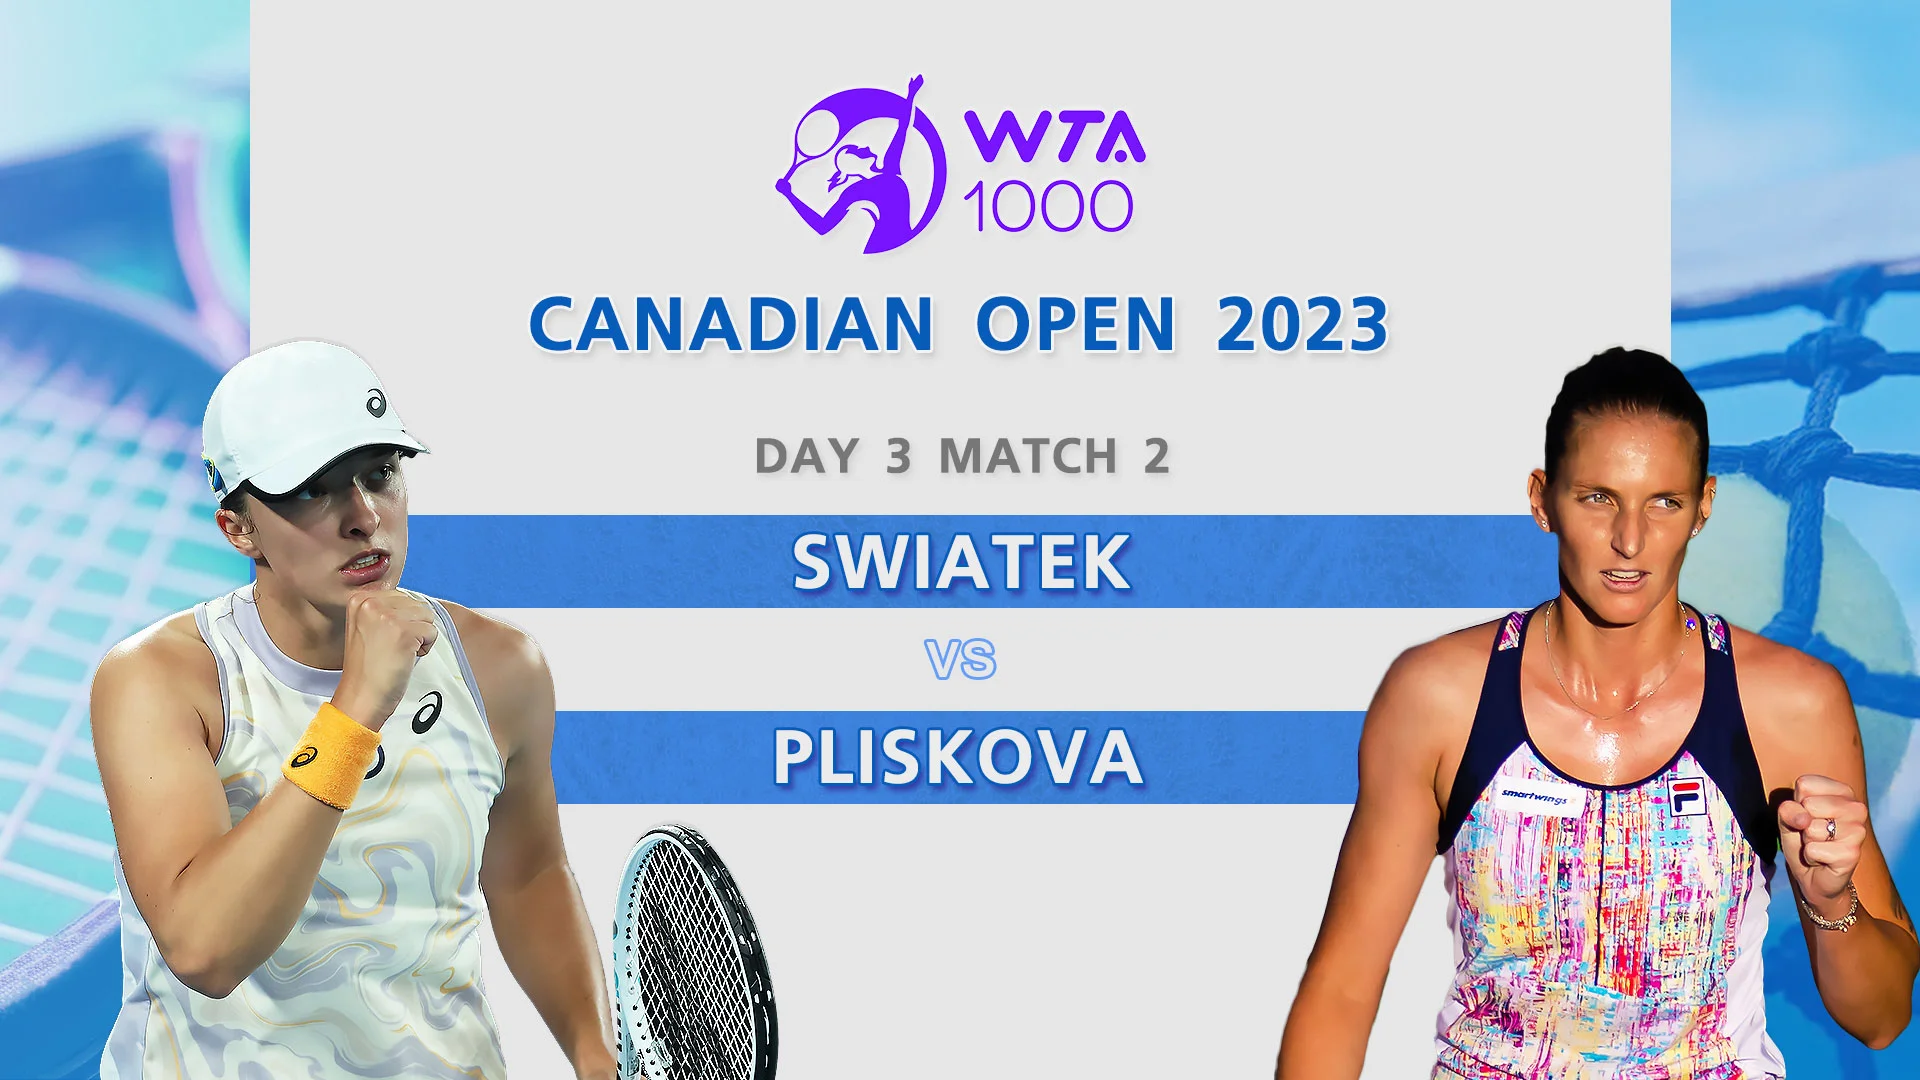 WTA 1000 Canadian Open 2023 013Day 3 Match 2 Swiatek VS Pliskova 10